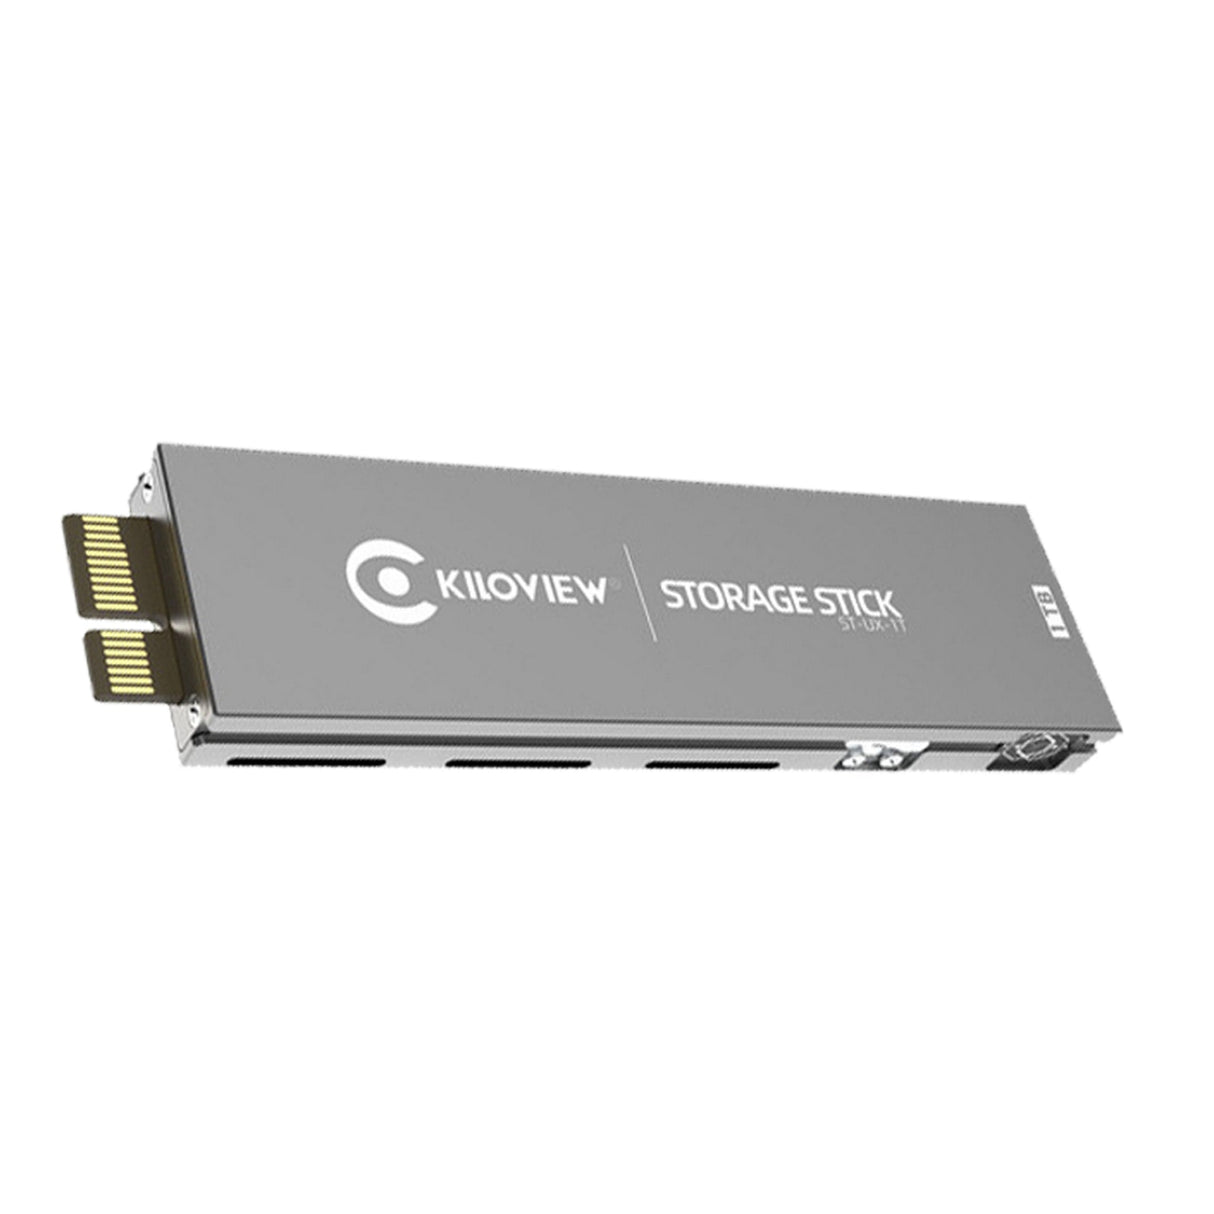 Kiloview SSD Storage Stick